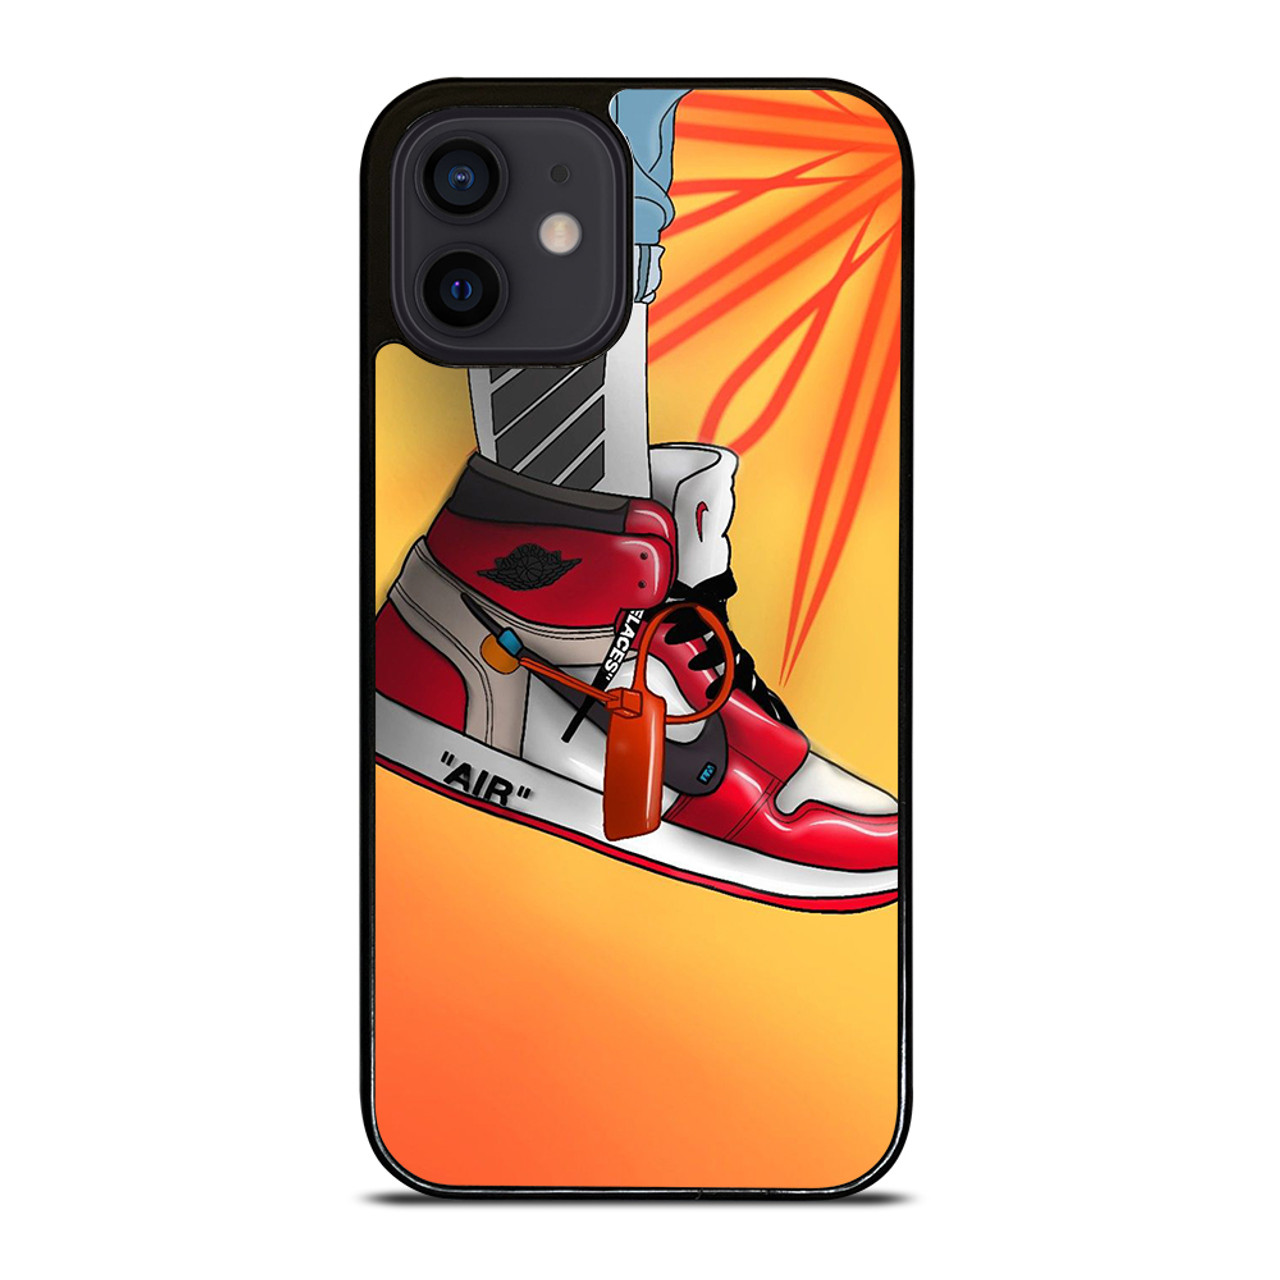 Jordan iPhone 12 Mini Case